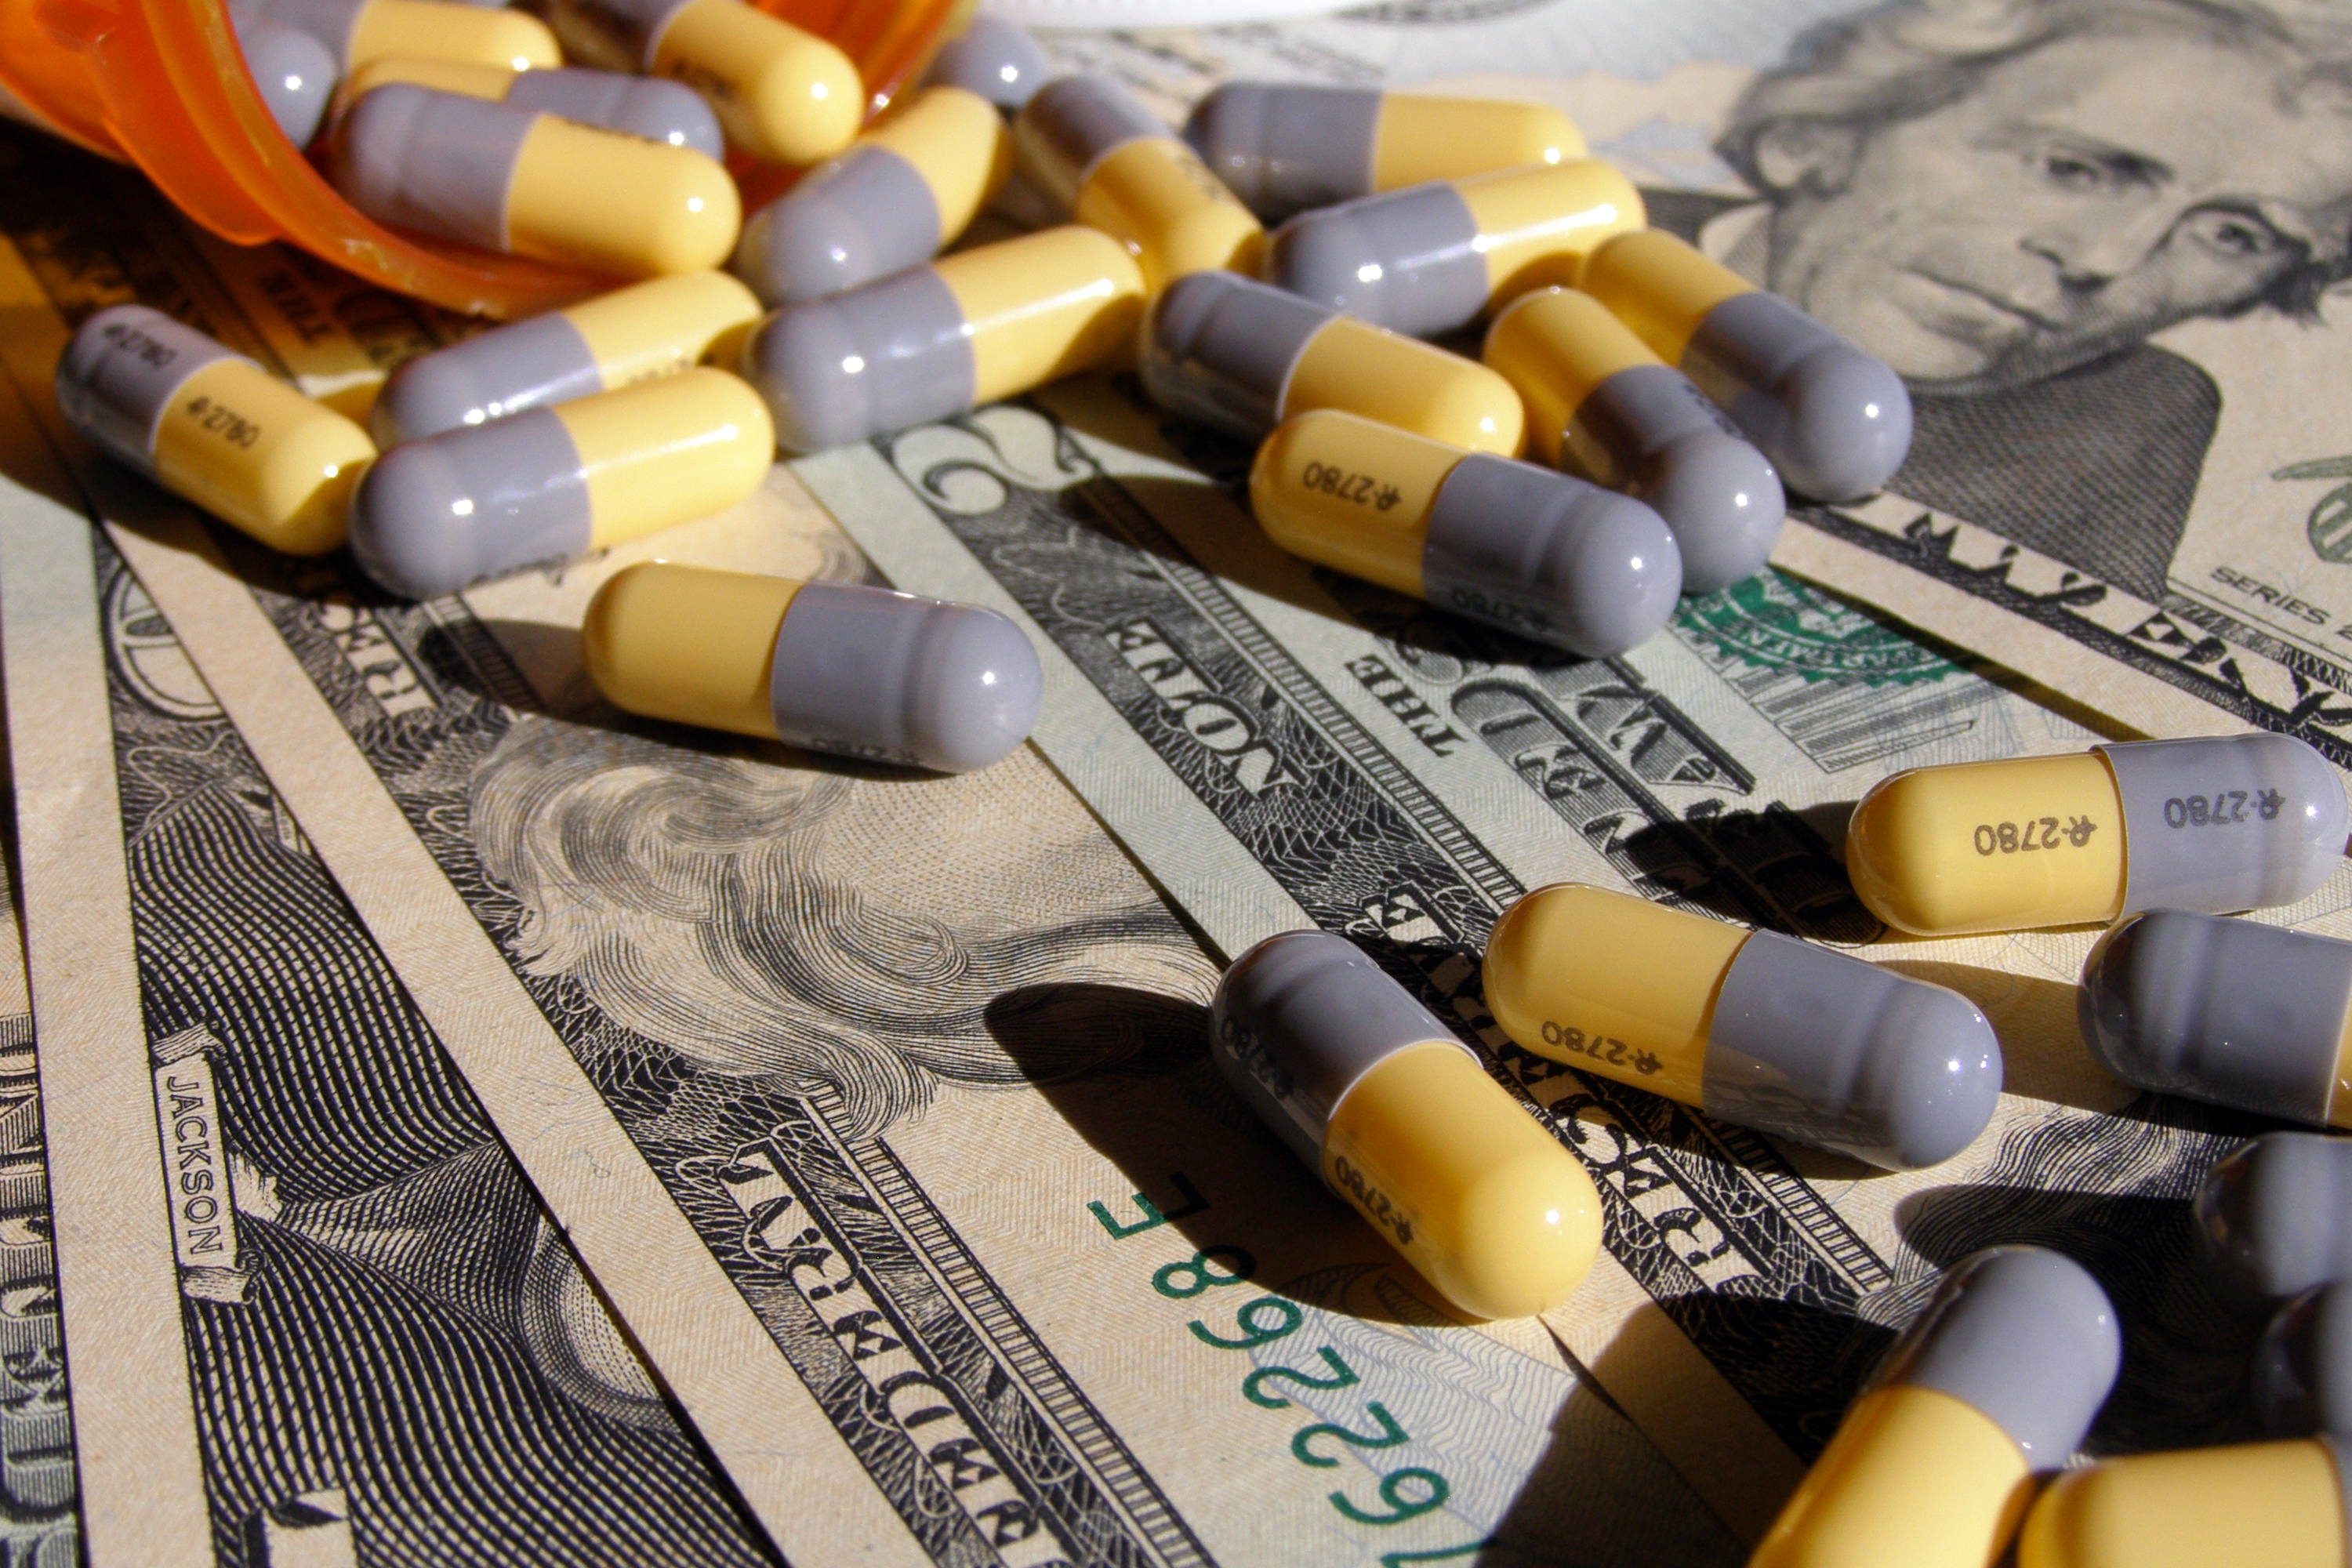 Big Pharma Tax Cuts Benefit Them Not Patients or Economy